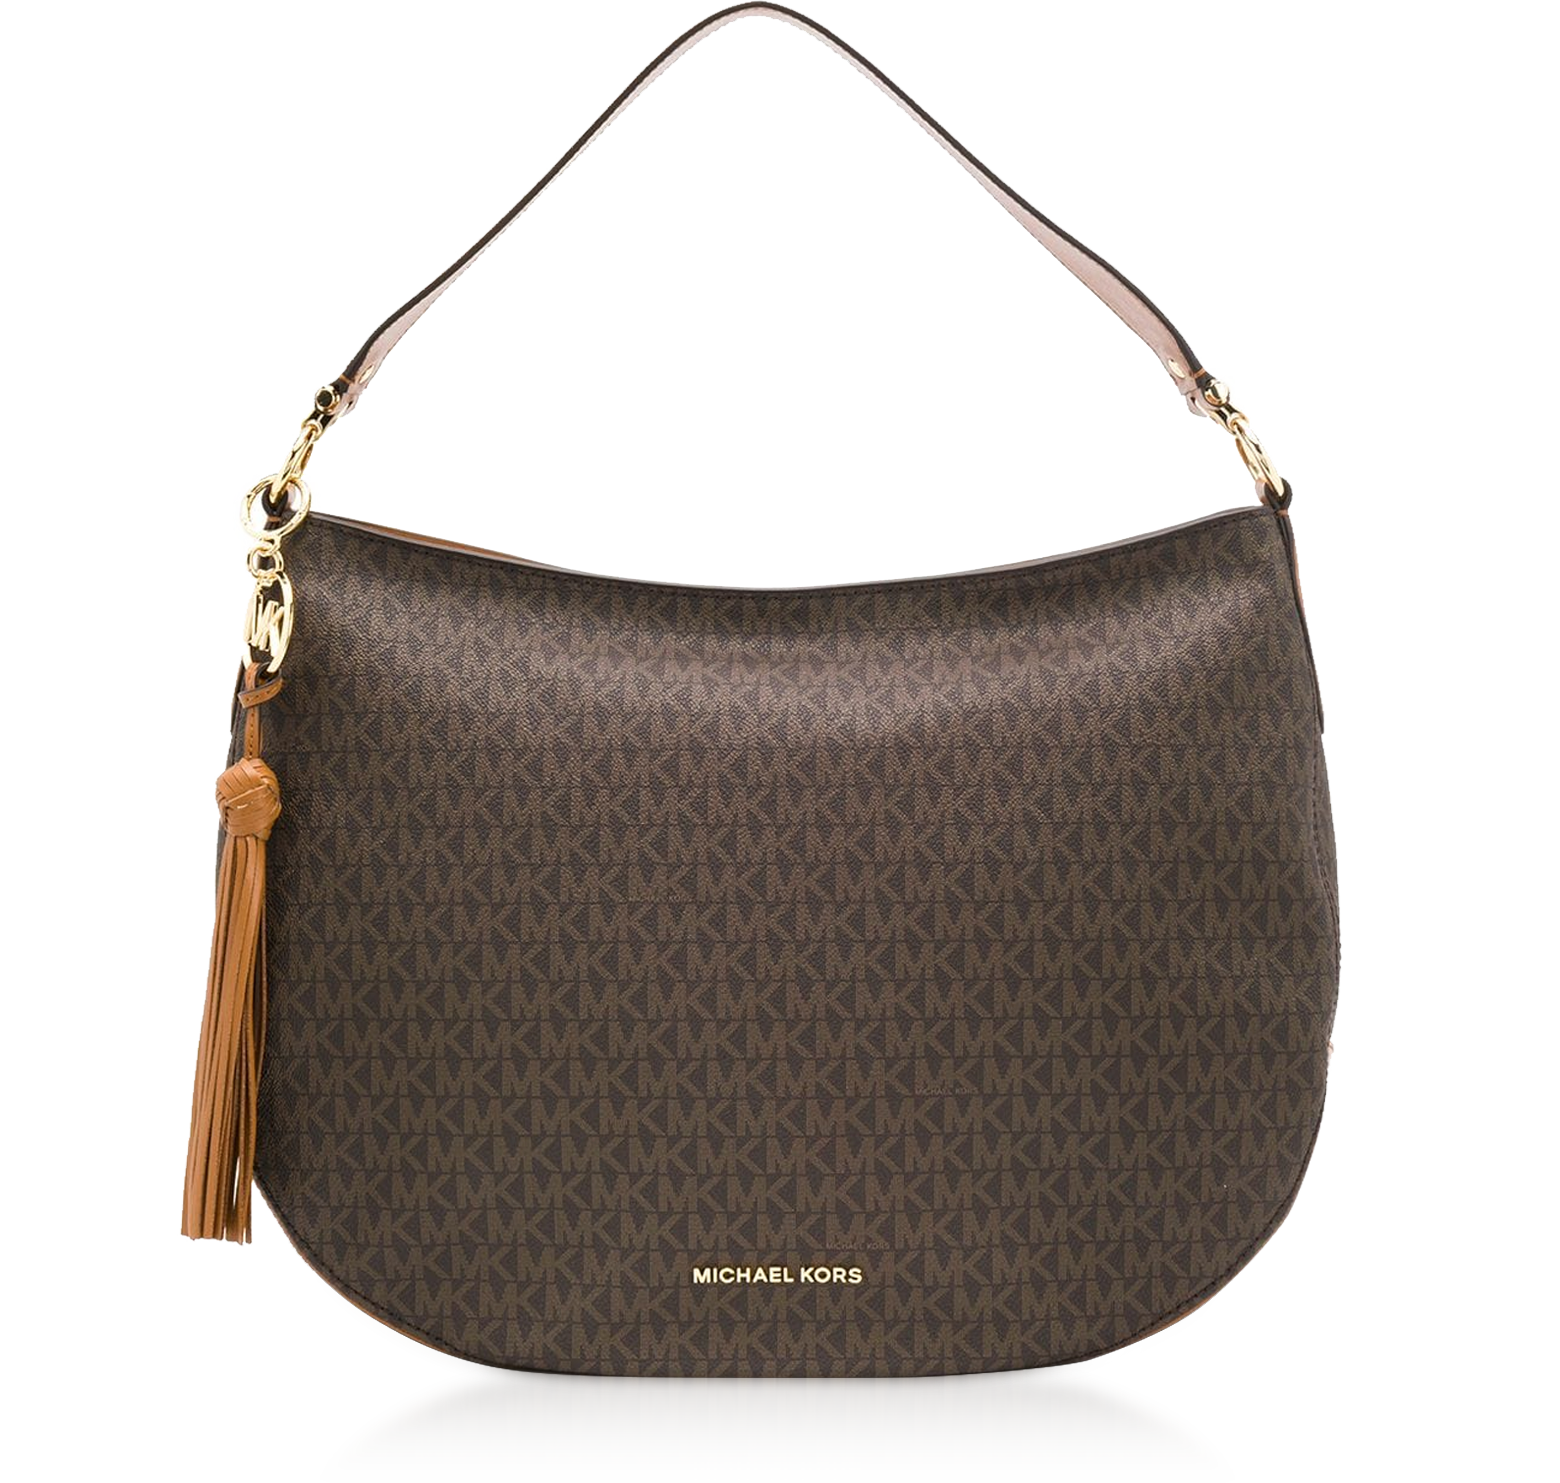 NWT Michael Kors Frankie LG Drawstring leather Shoulder Bag, Dark Taupe